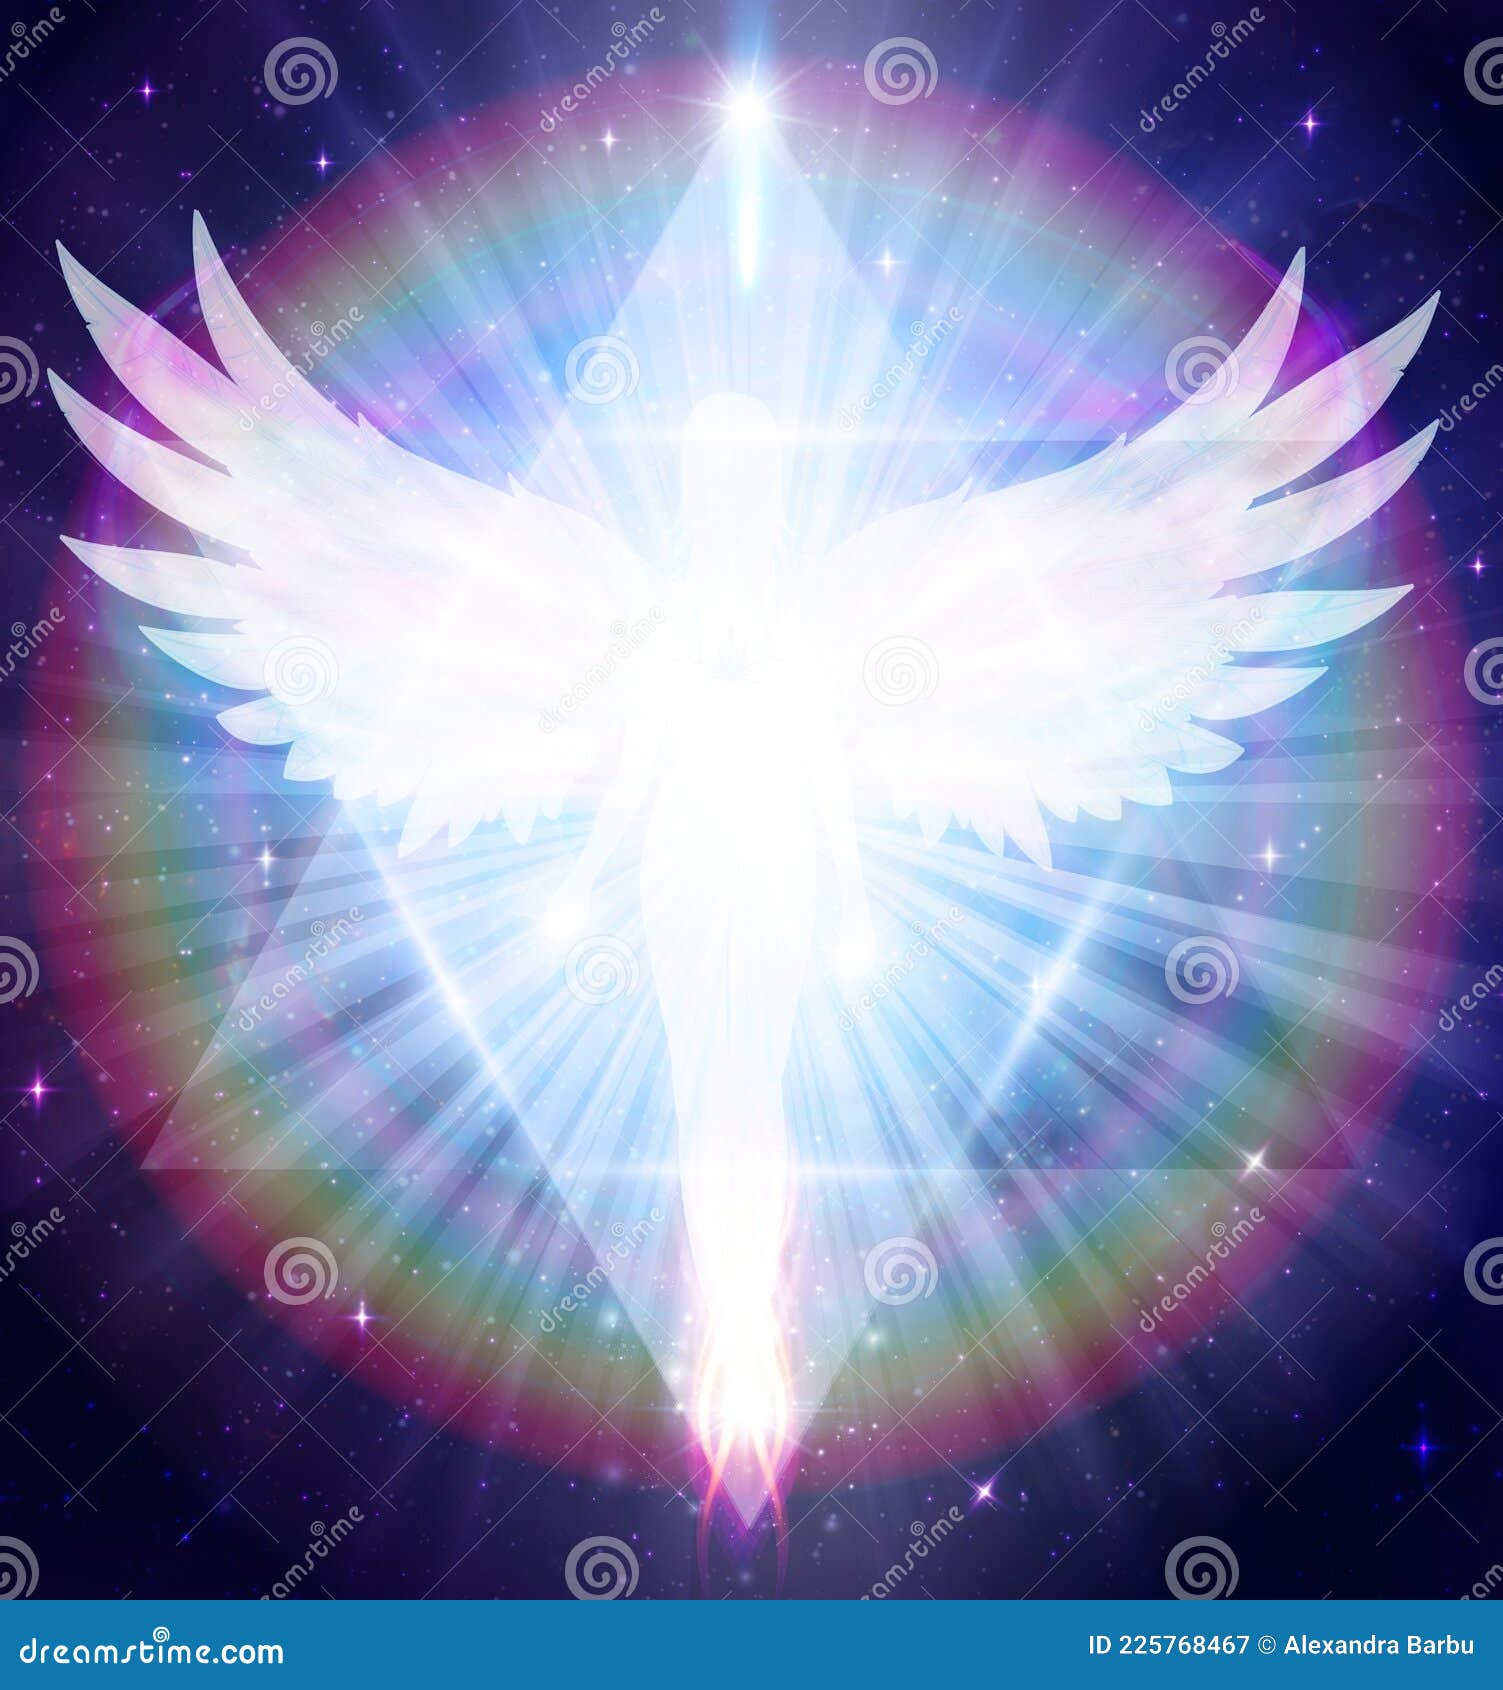 angel of light and love doing a miracle, rainbow power energy, merkaba, star soul gate, diamond heart